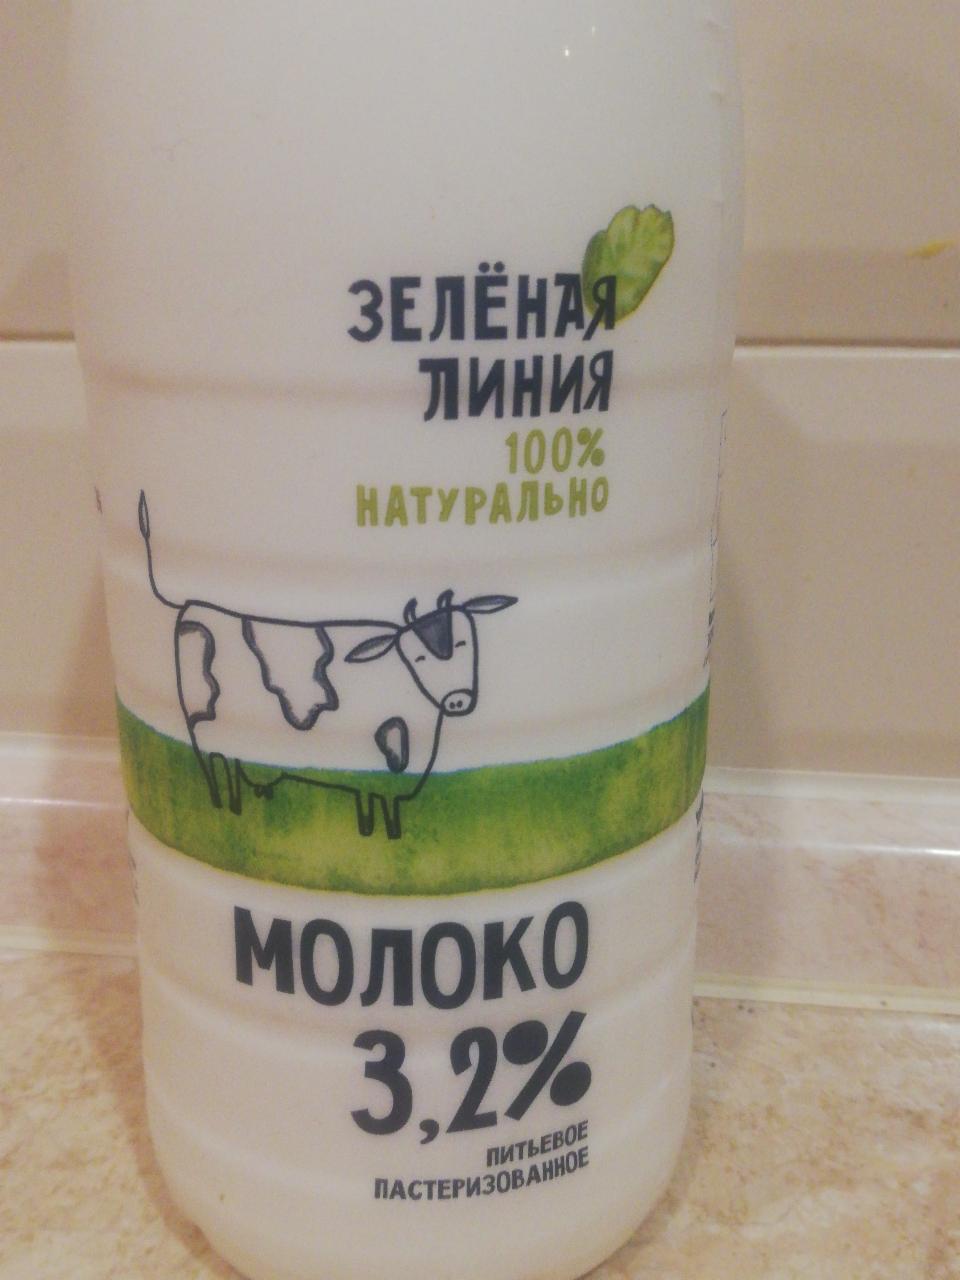 Фото - Молоко 3.2% Зелёная линия